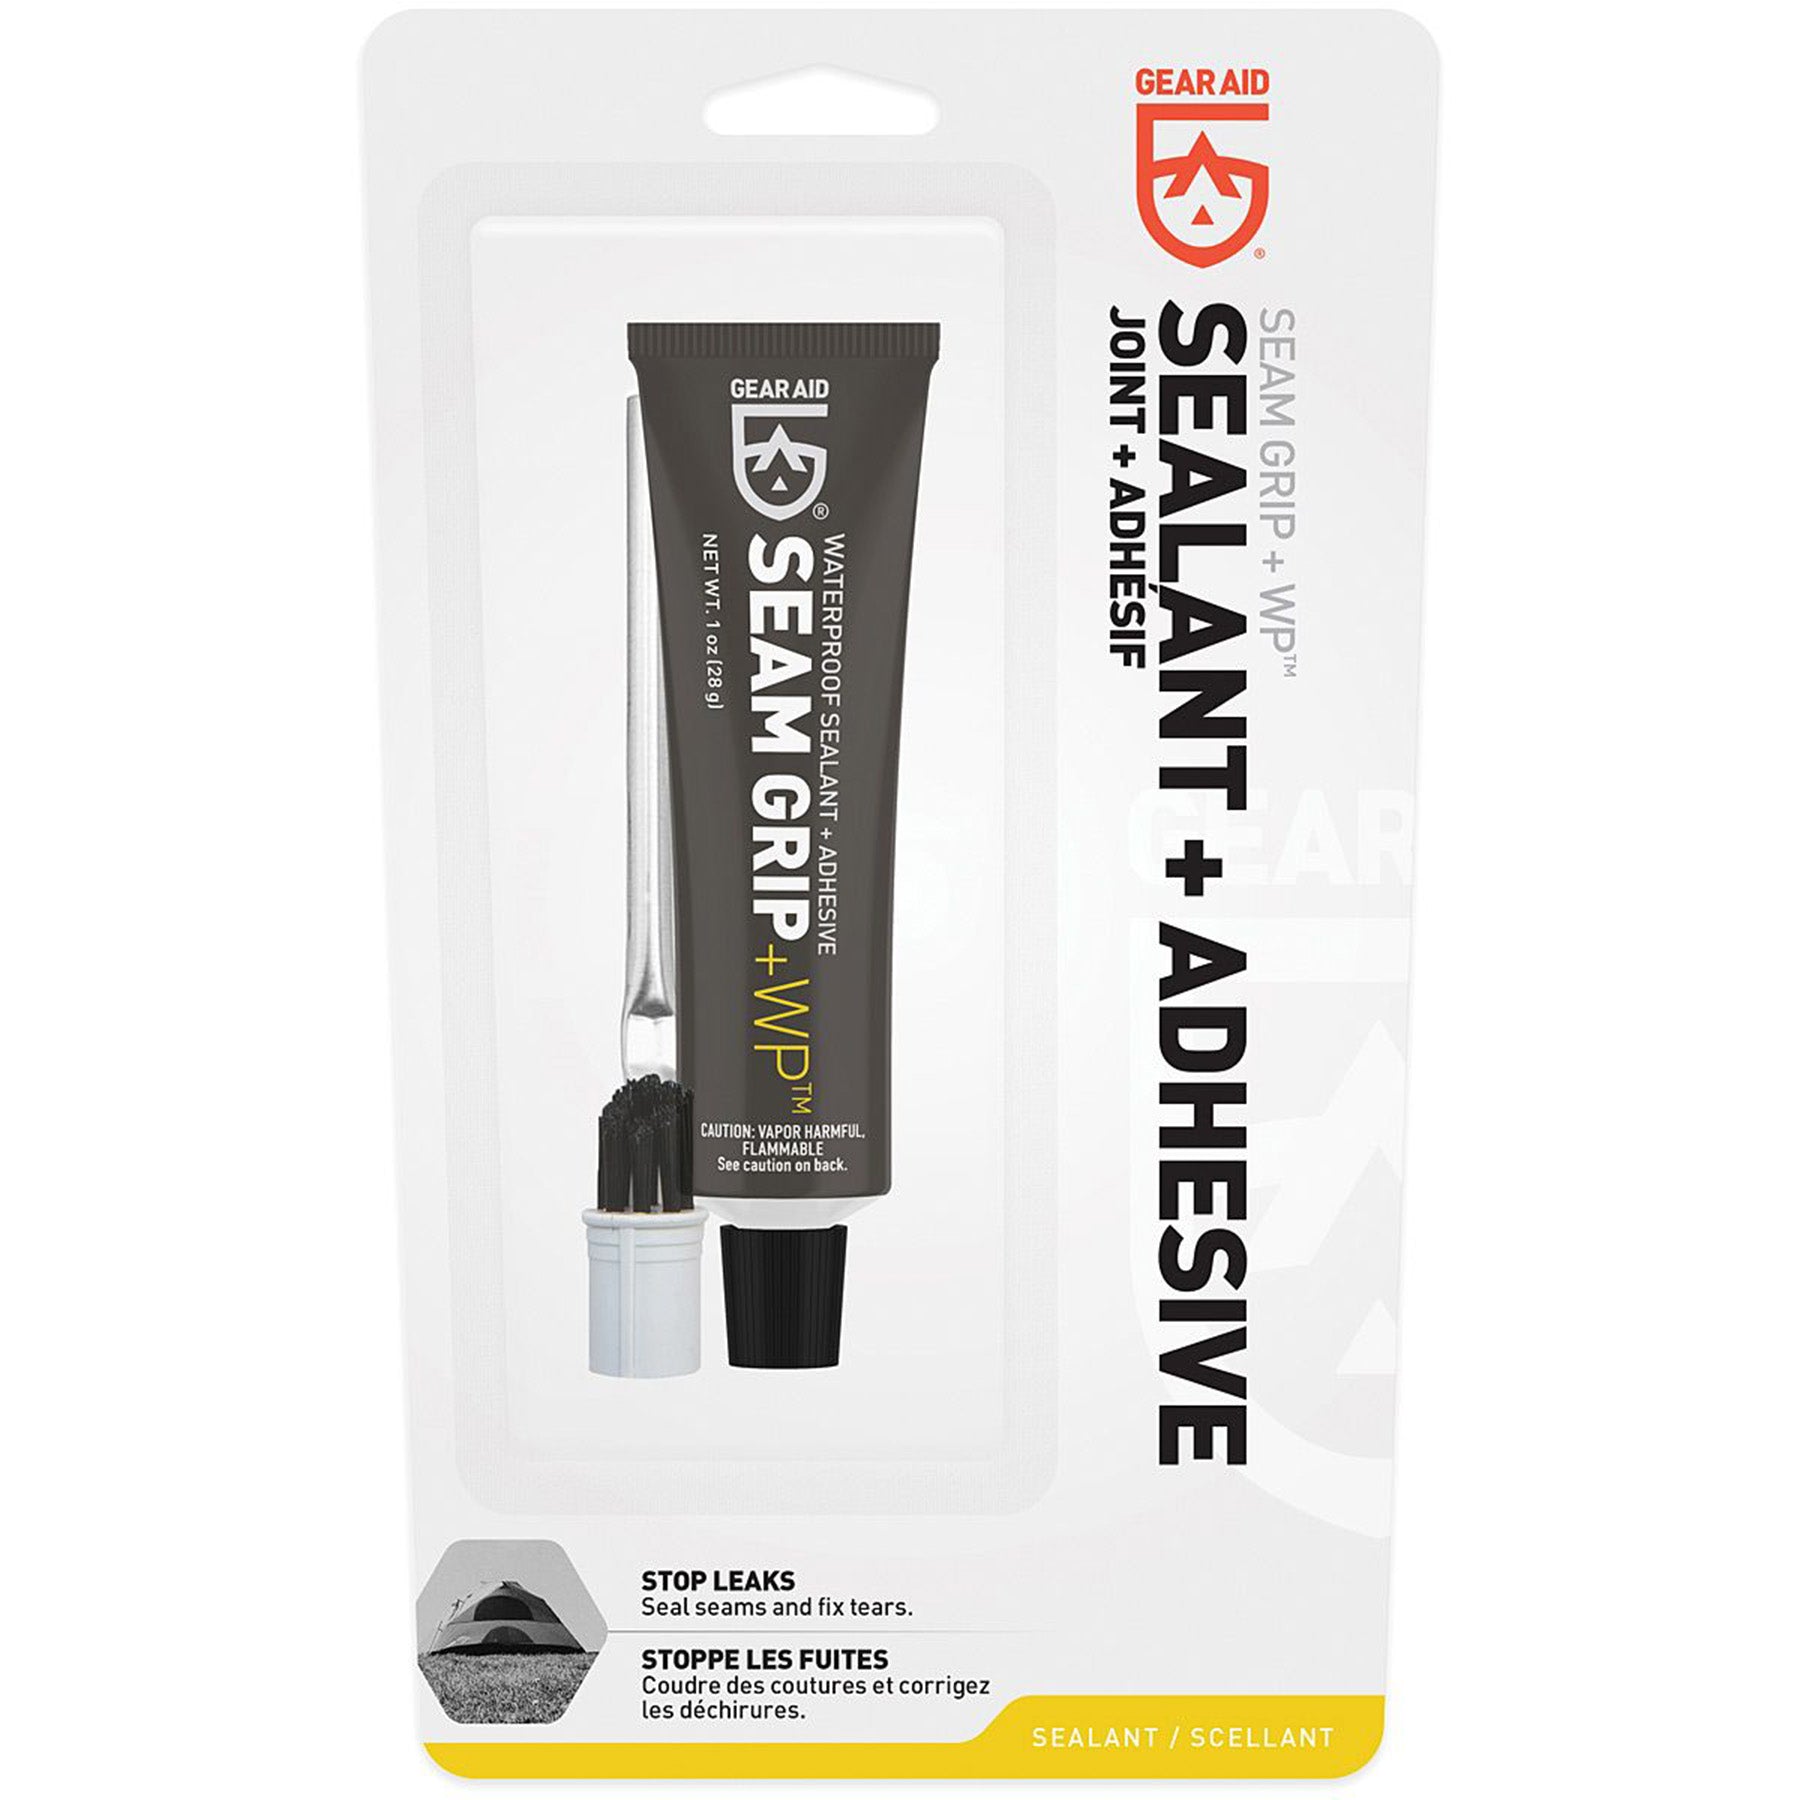 seam grip waterproof sealer, designed to stop leaks, seal seams and fix tears in outdoor fabrics; 1oz tube + applicator brush